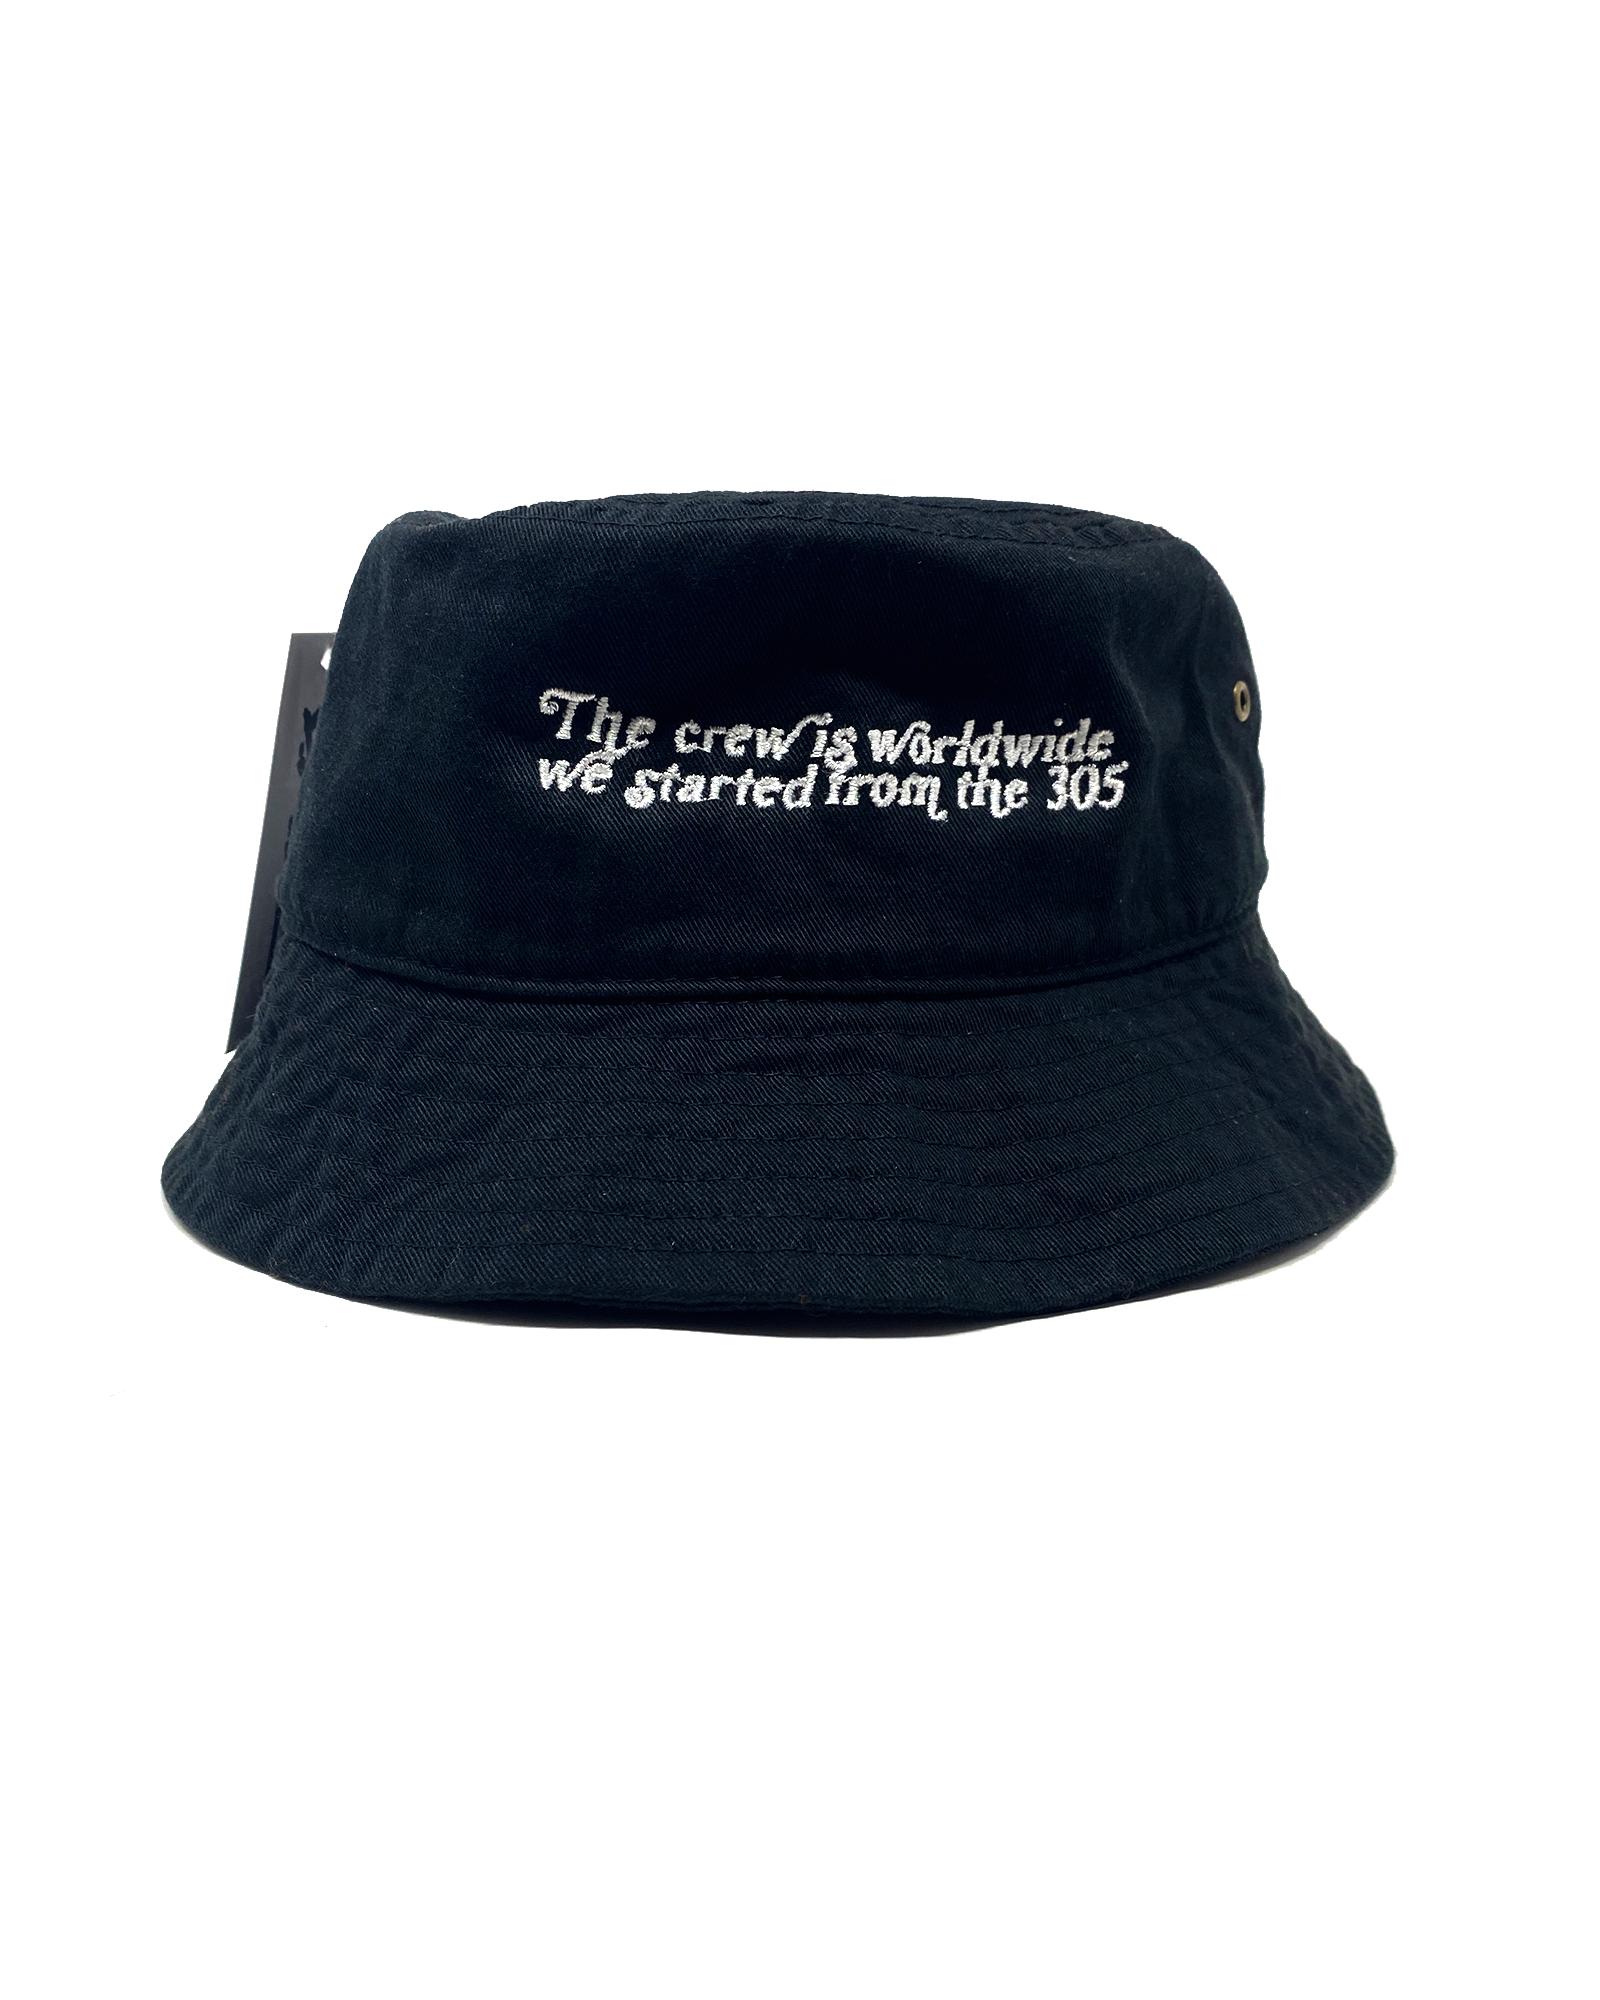 DADE Worldwide Bucket Hat –